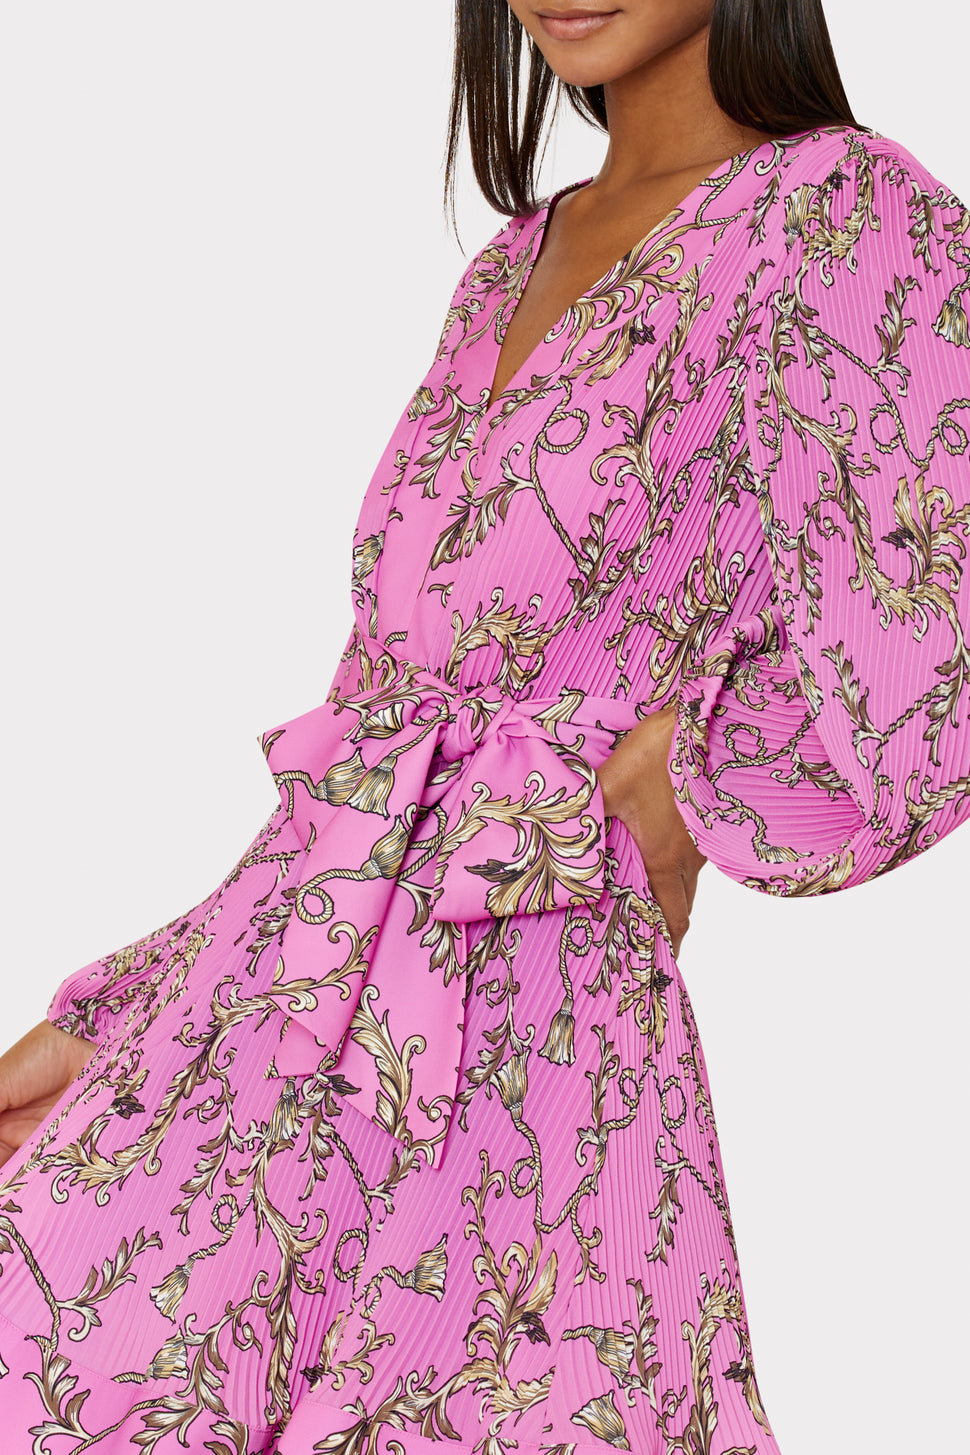 NEW Lands End Jacket-Vest Bright Pink Flower Embroidered Youth Girls Sz.L  (14)